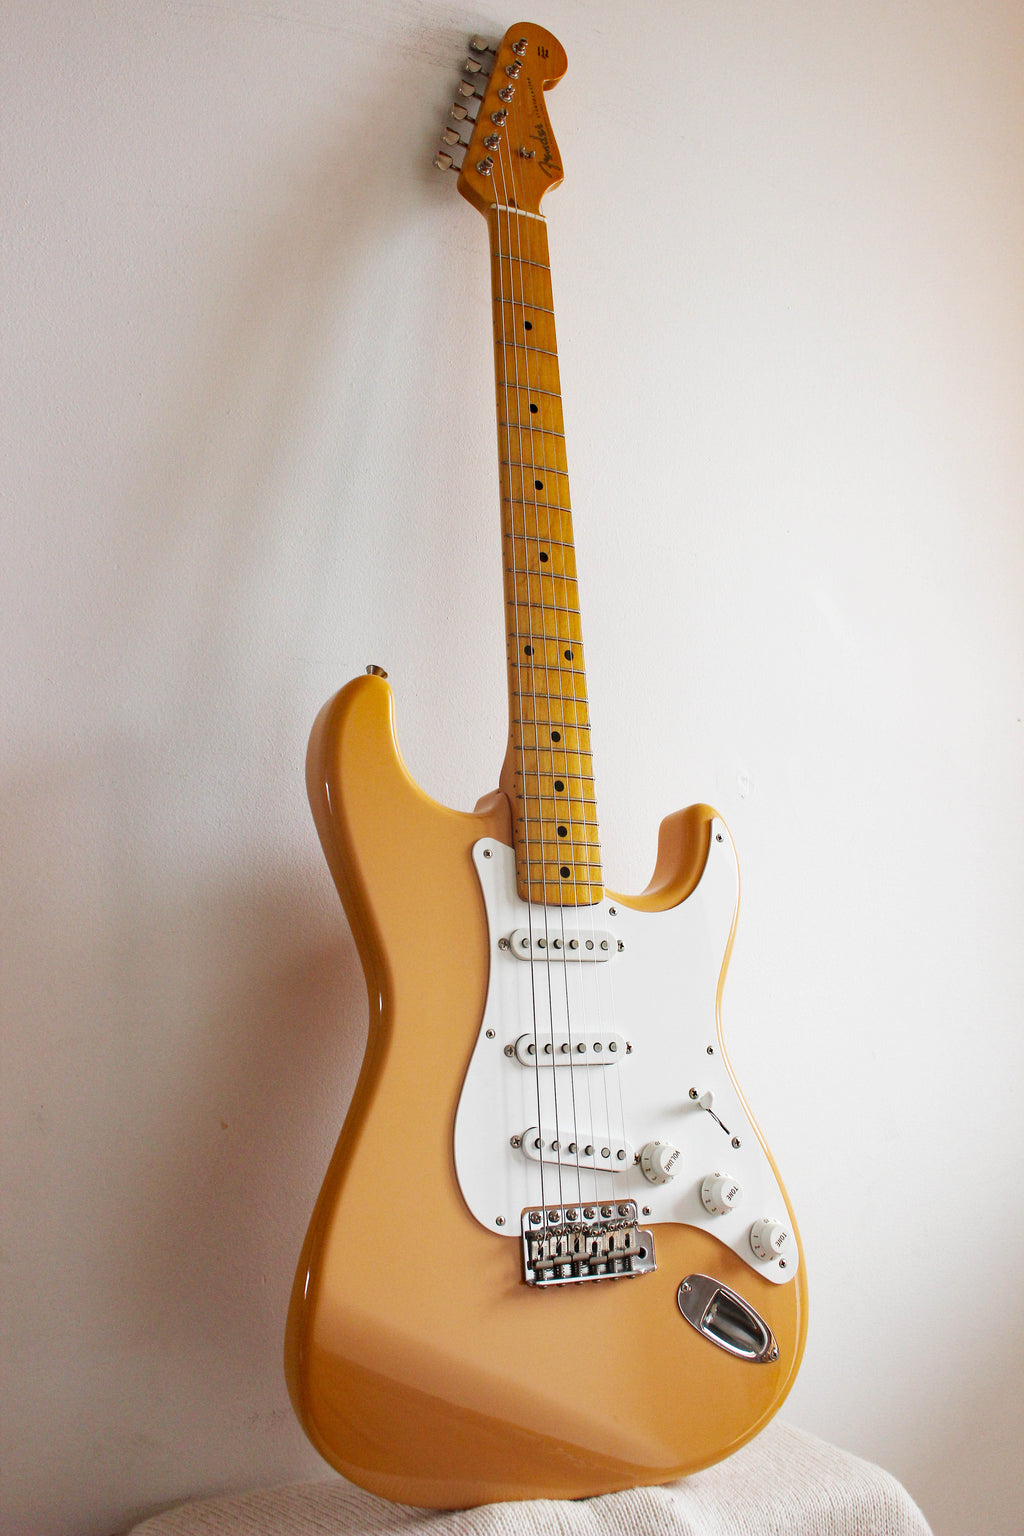 Used Fender Stratocaster '57 Reissue Shell Pink